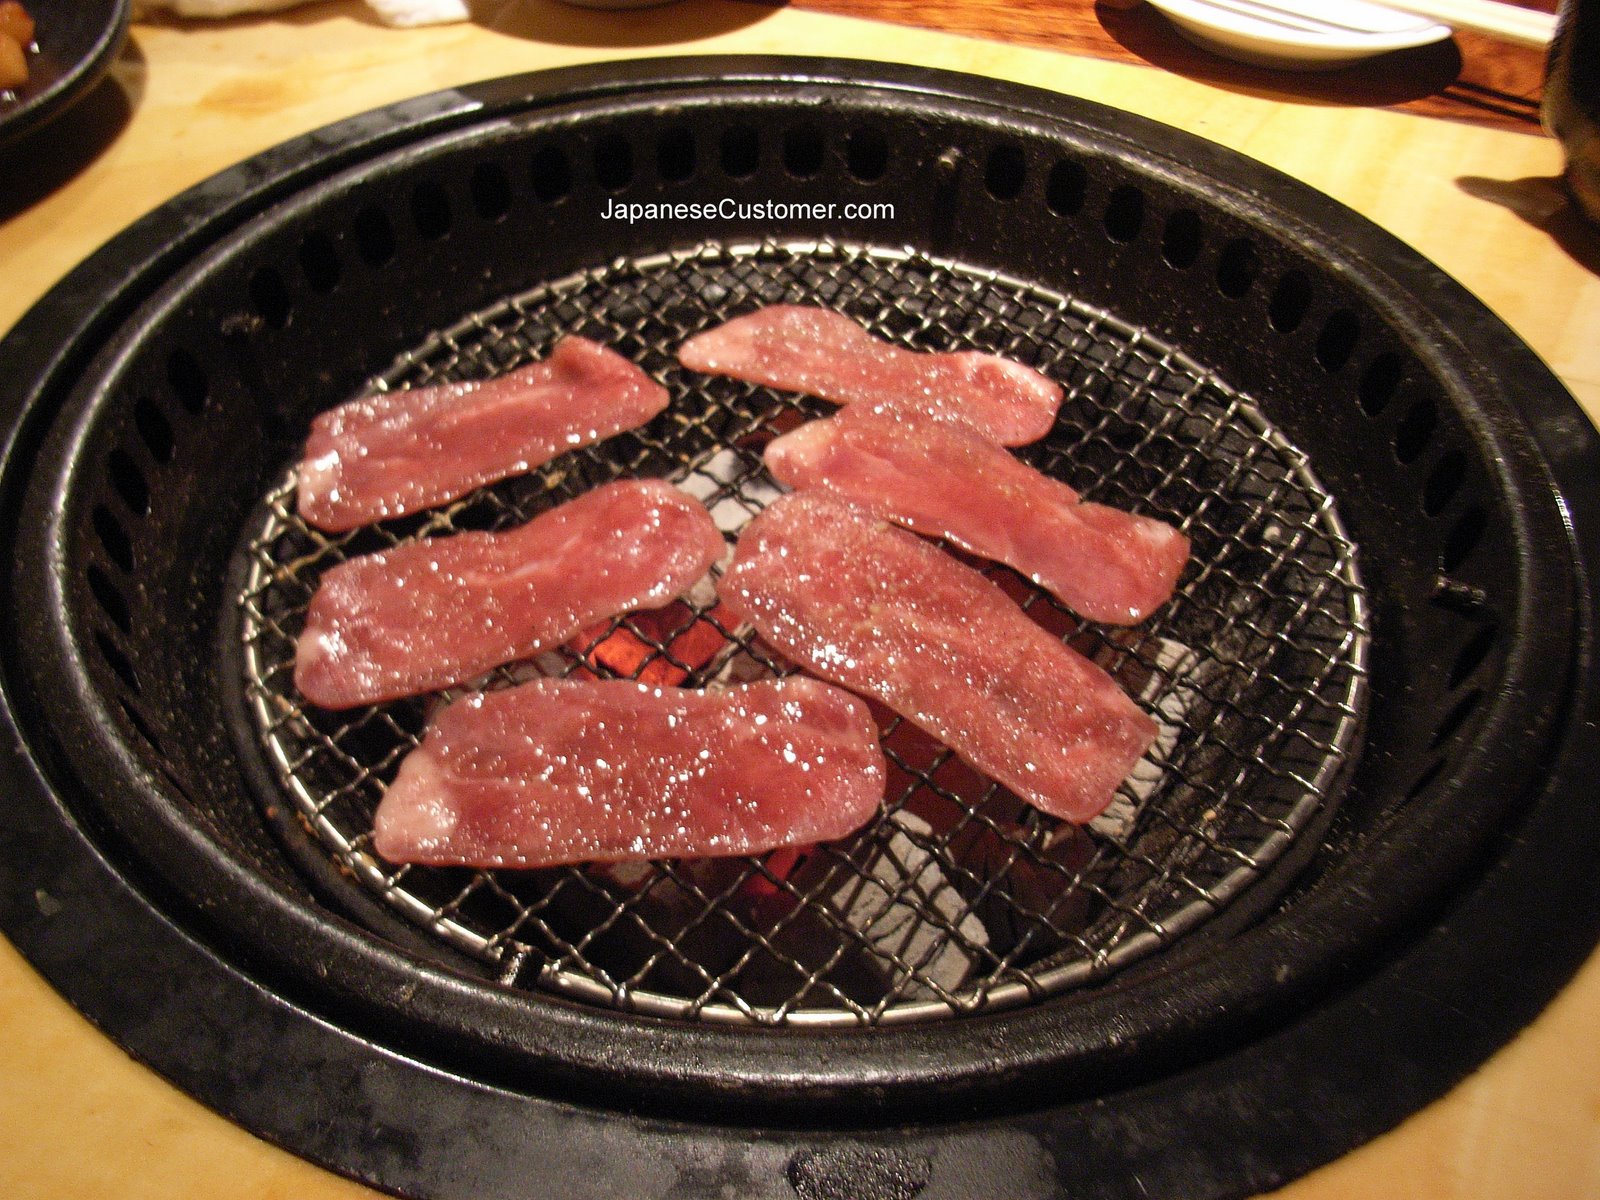 Beef barbeque restuarant in Japan copyright peter hanami 2004